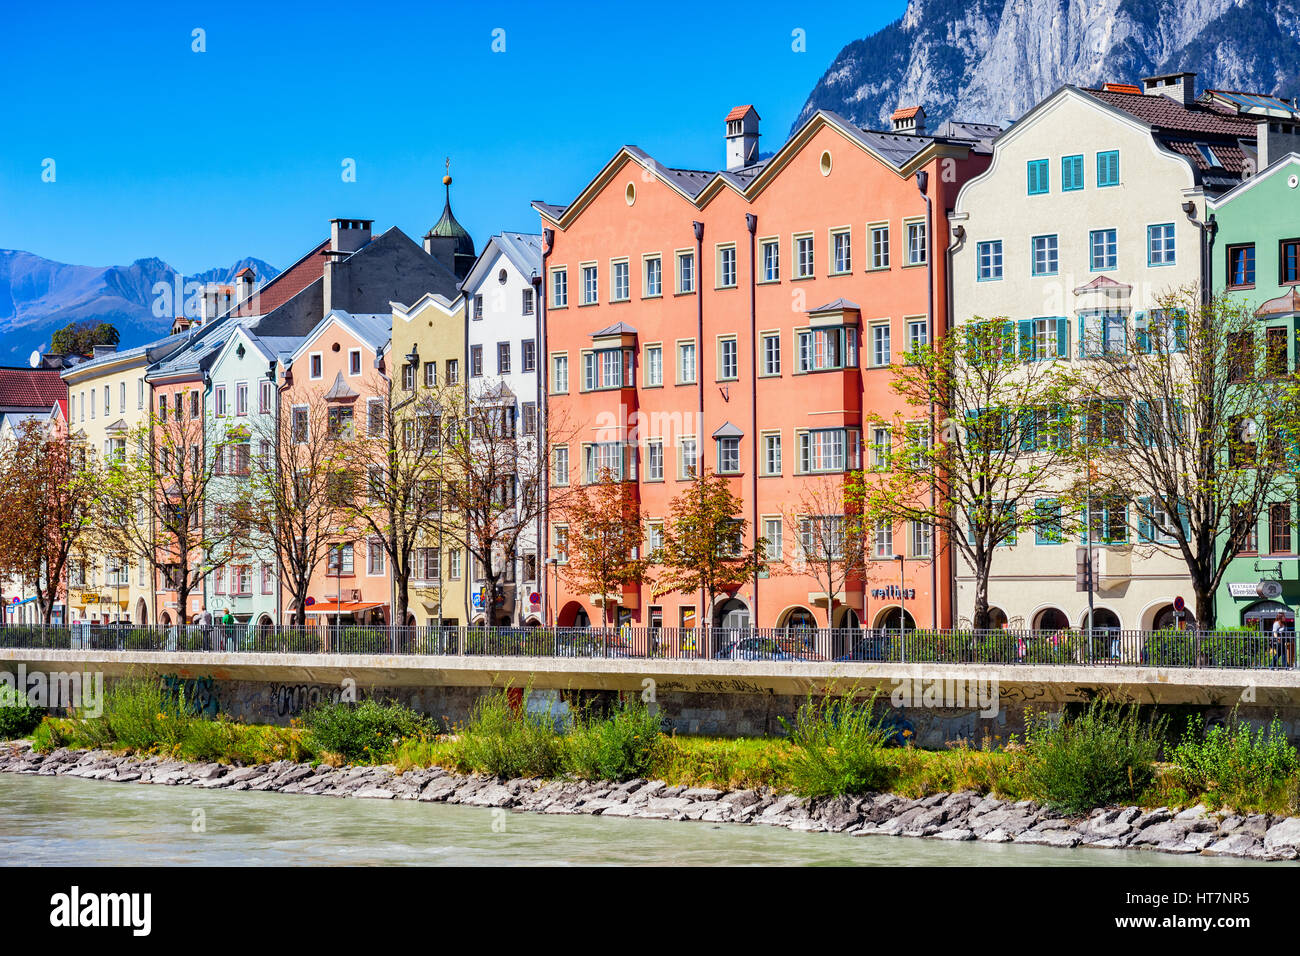 Colorate facciate di case da parte del fiume Inn nell'affascinante città di Innsbruck in Tirolo, Austria Foto Stock